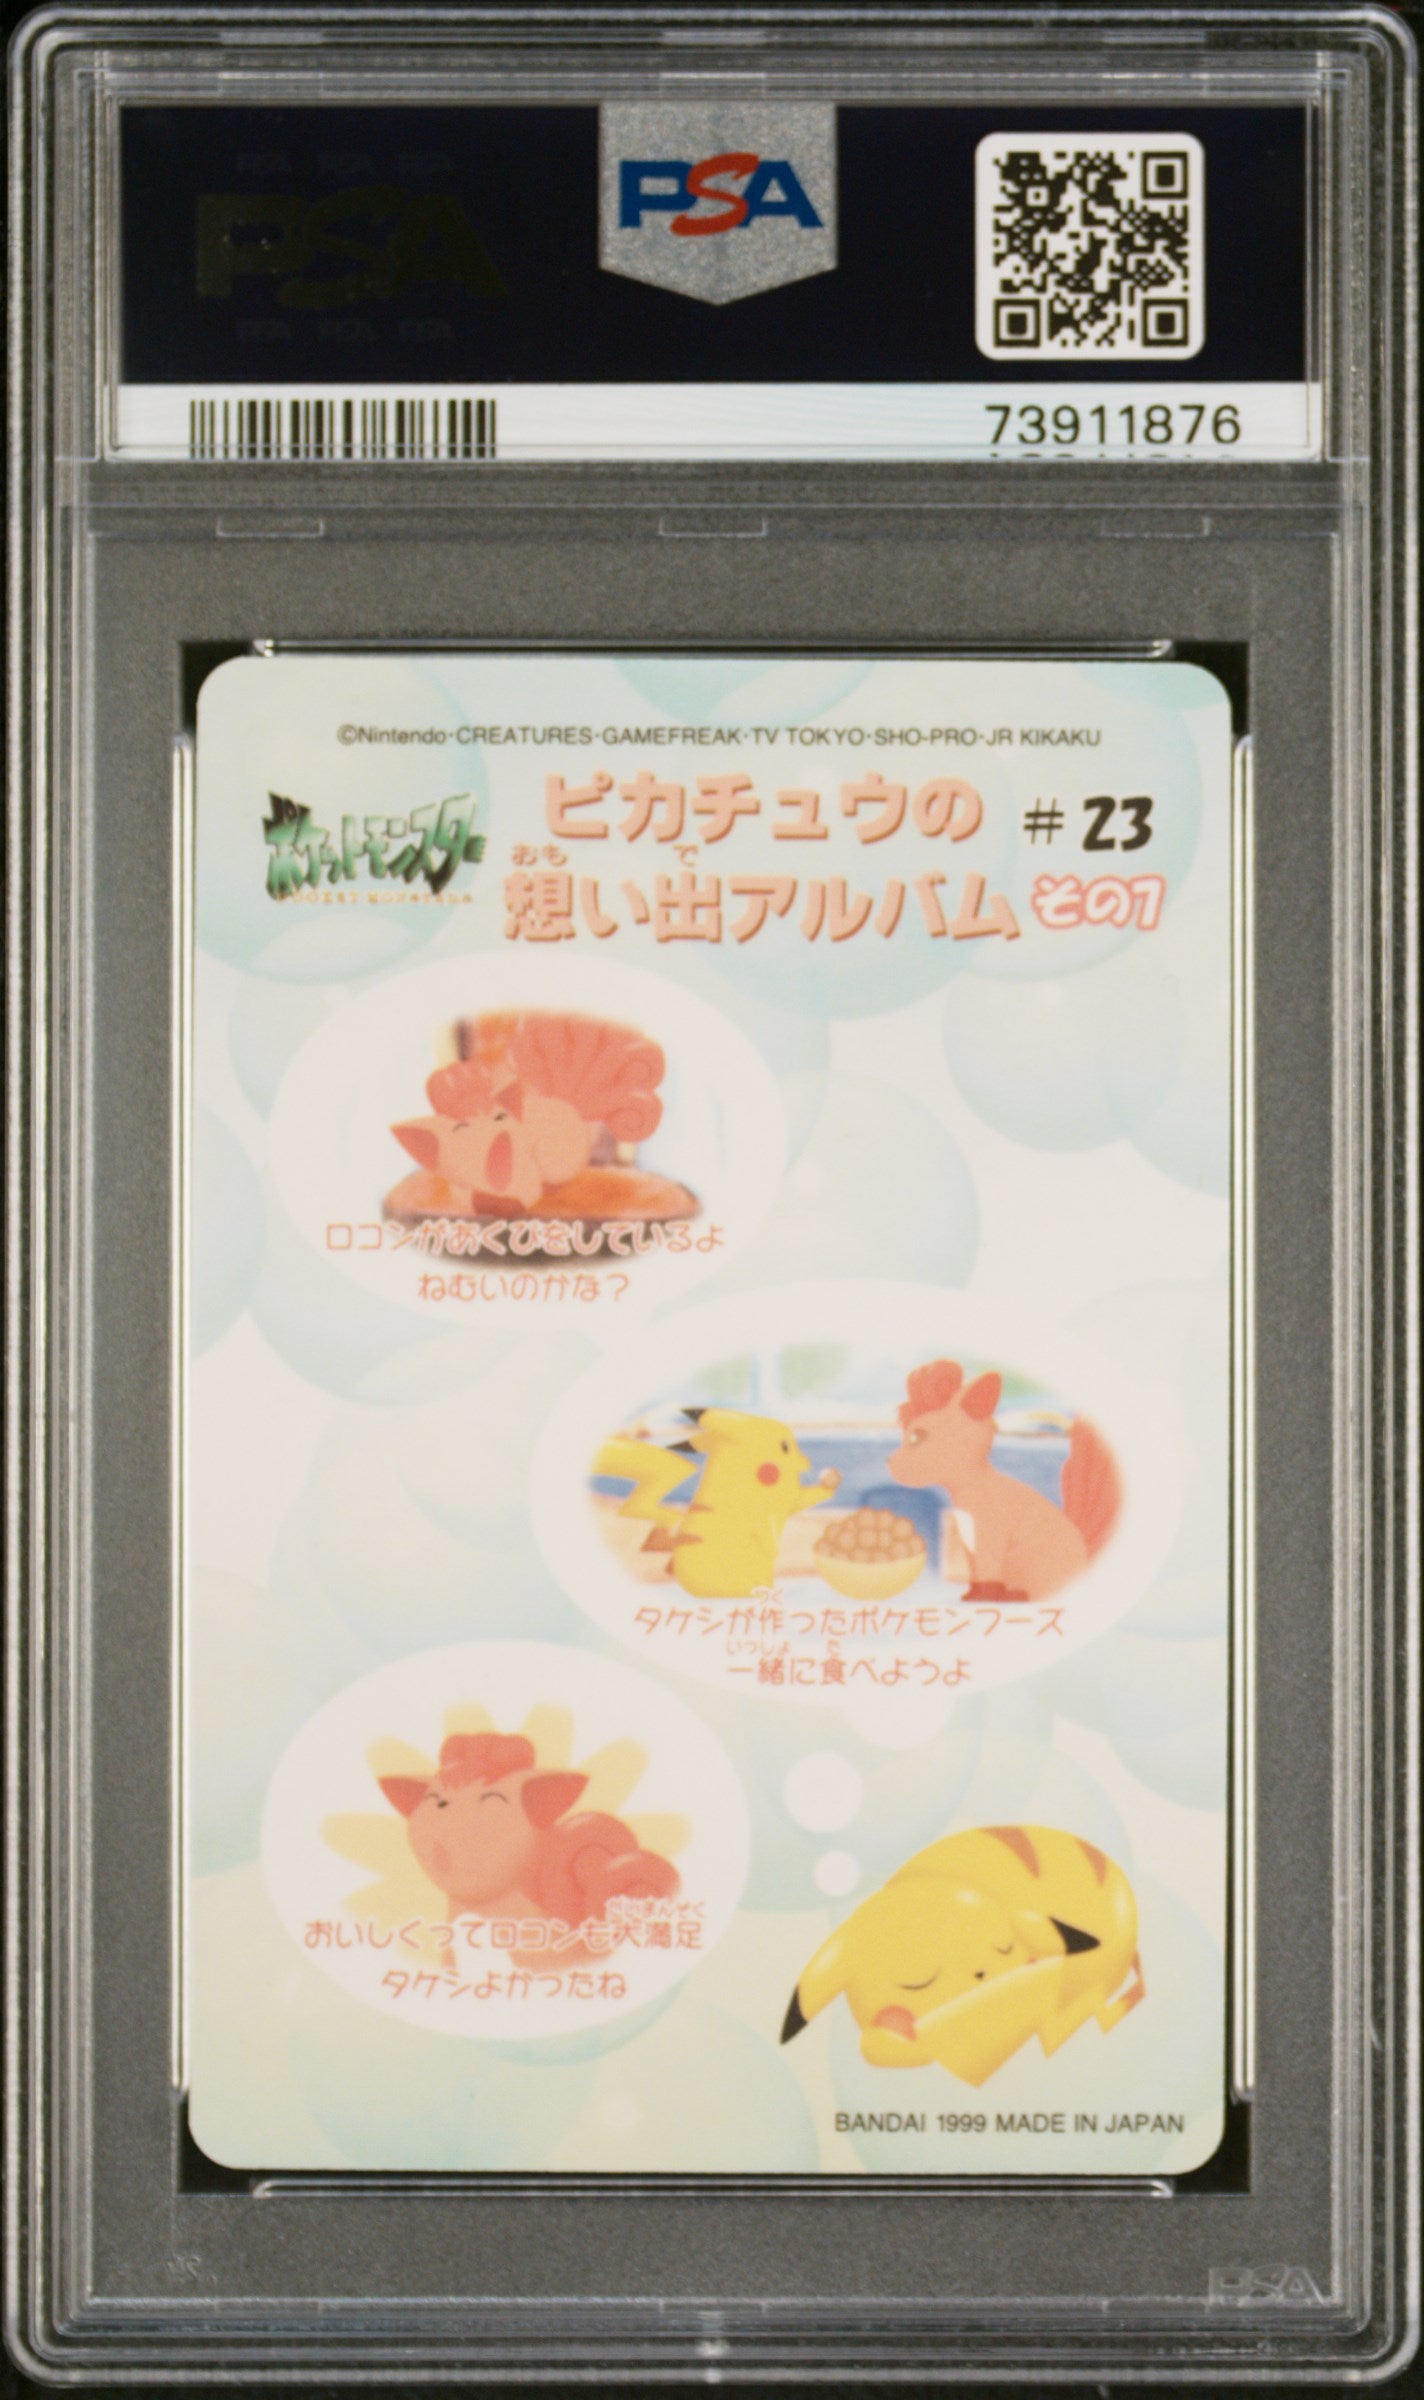 PSA 10 - Pikachu & Vulpix #23 Sealdass Fancy Graffiti 1998 Pocket Monsters - Pokemon